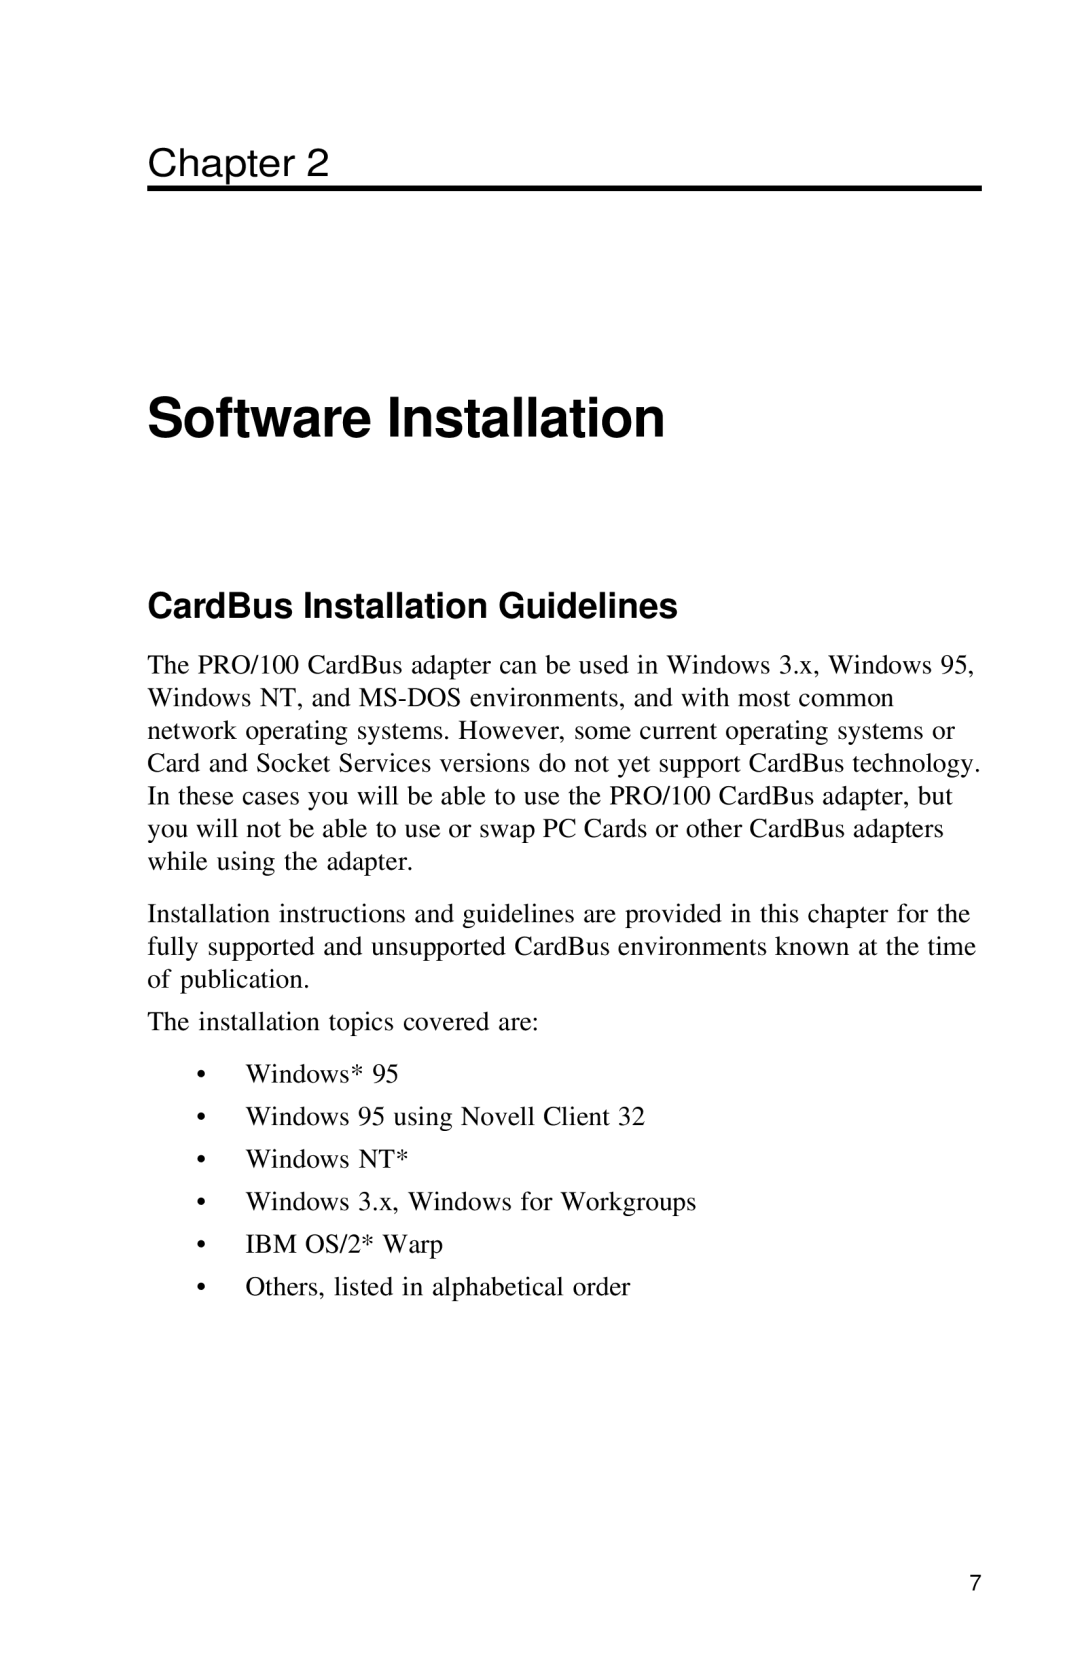 Intel PRO appendix Software Installation, CardBus Installation Guidelines 